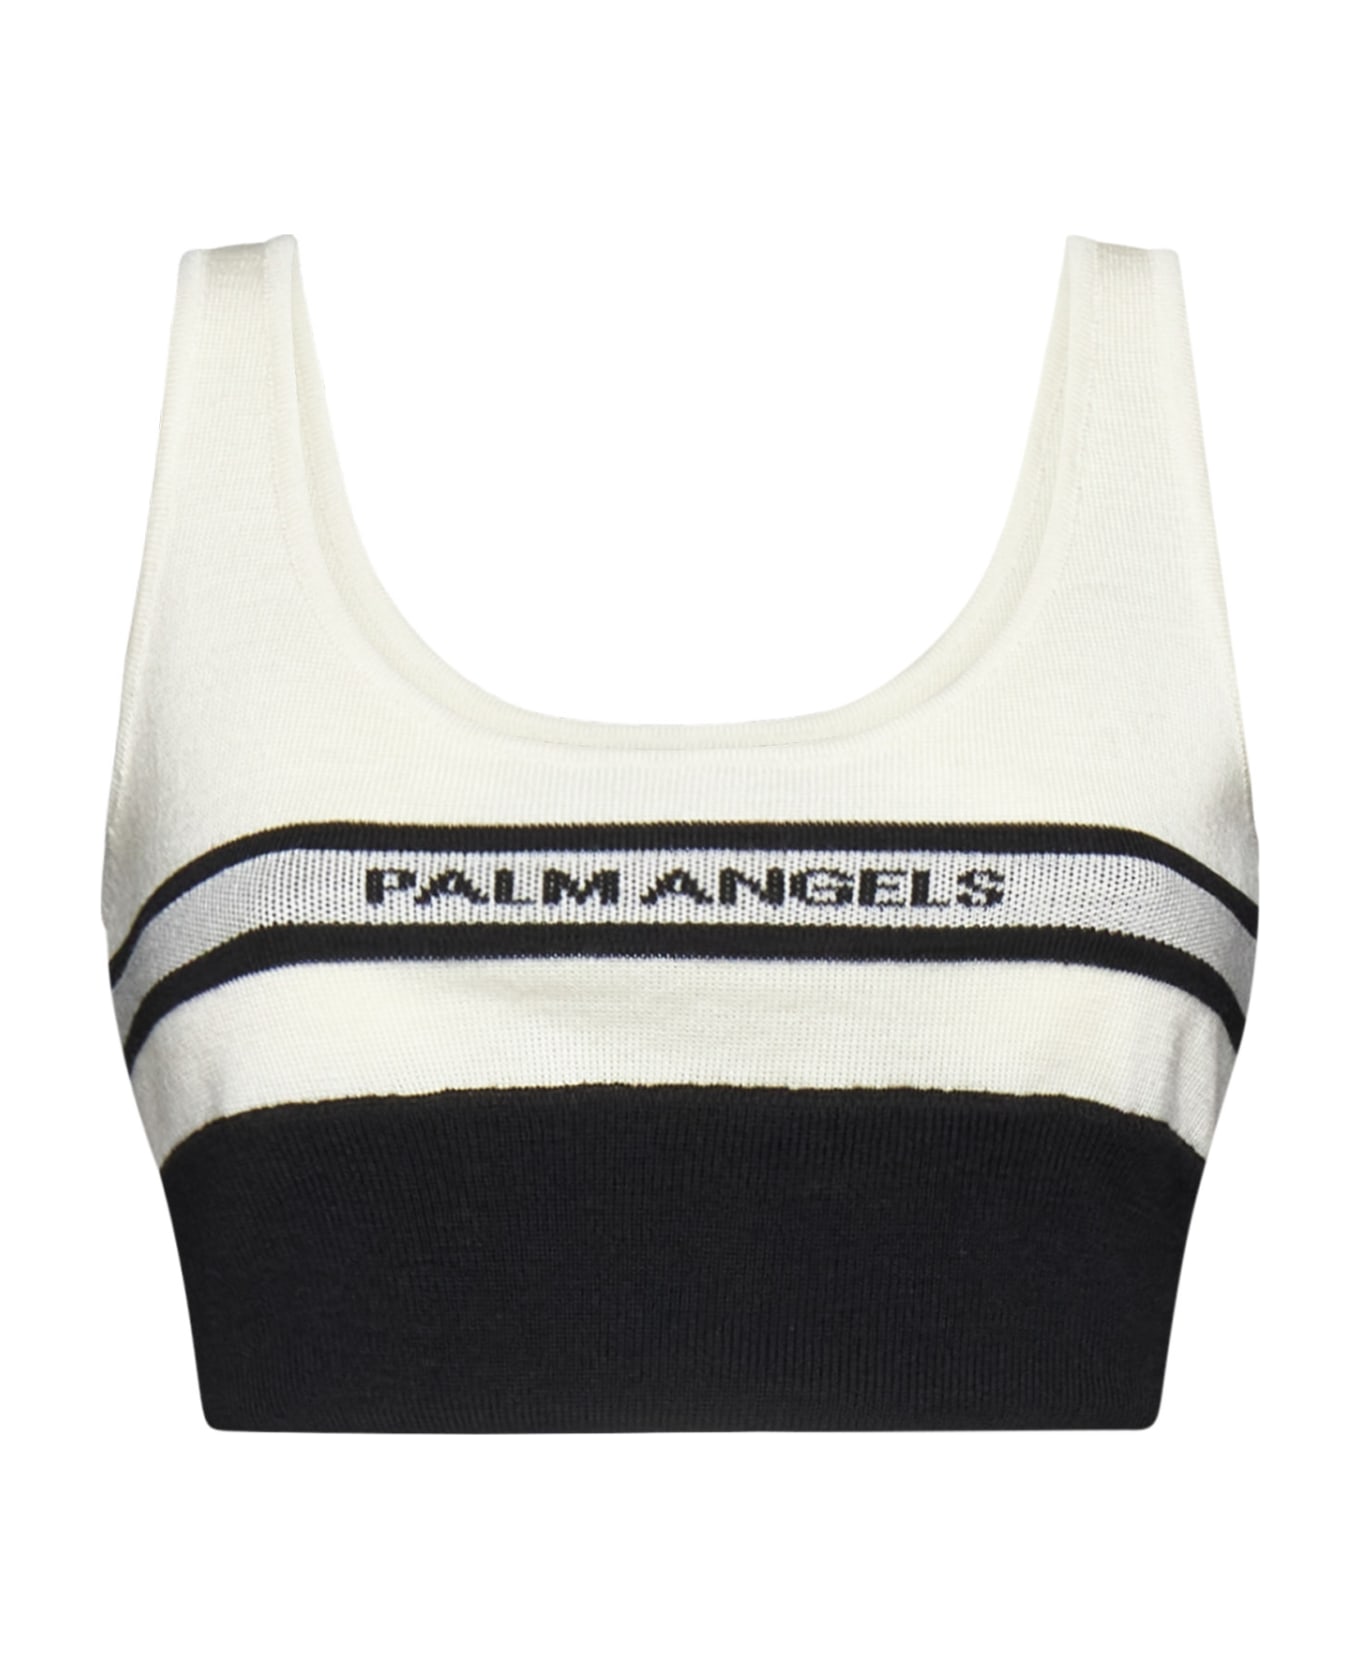 Palm Angels Wool Knit Bra Top - Black butter